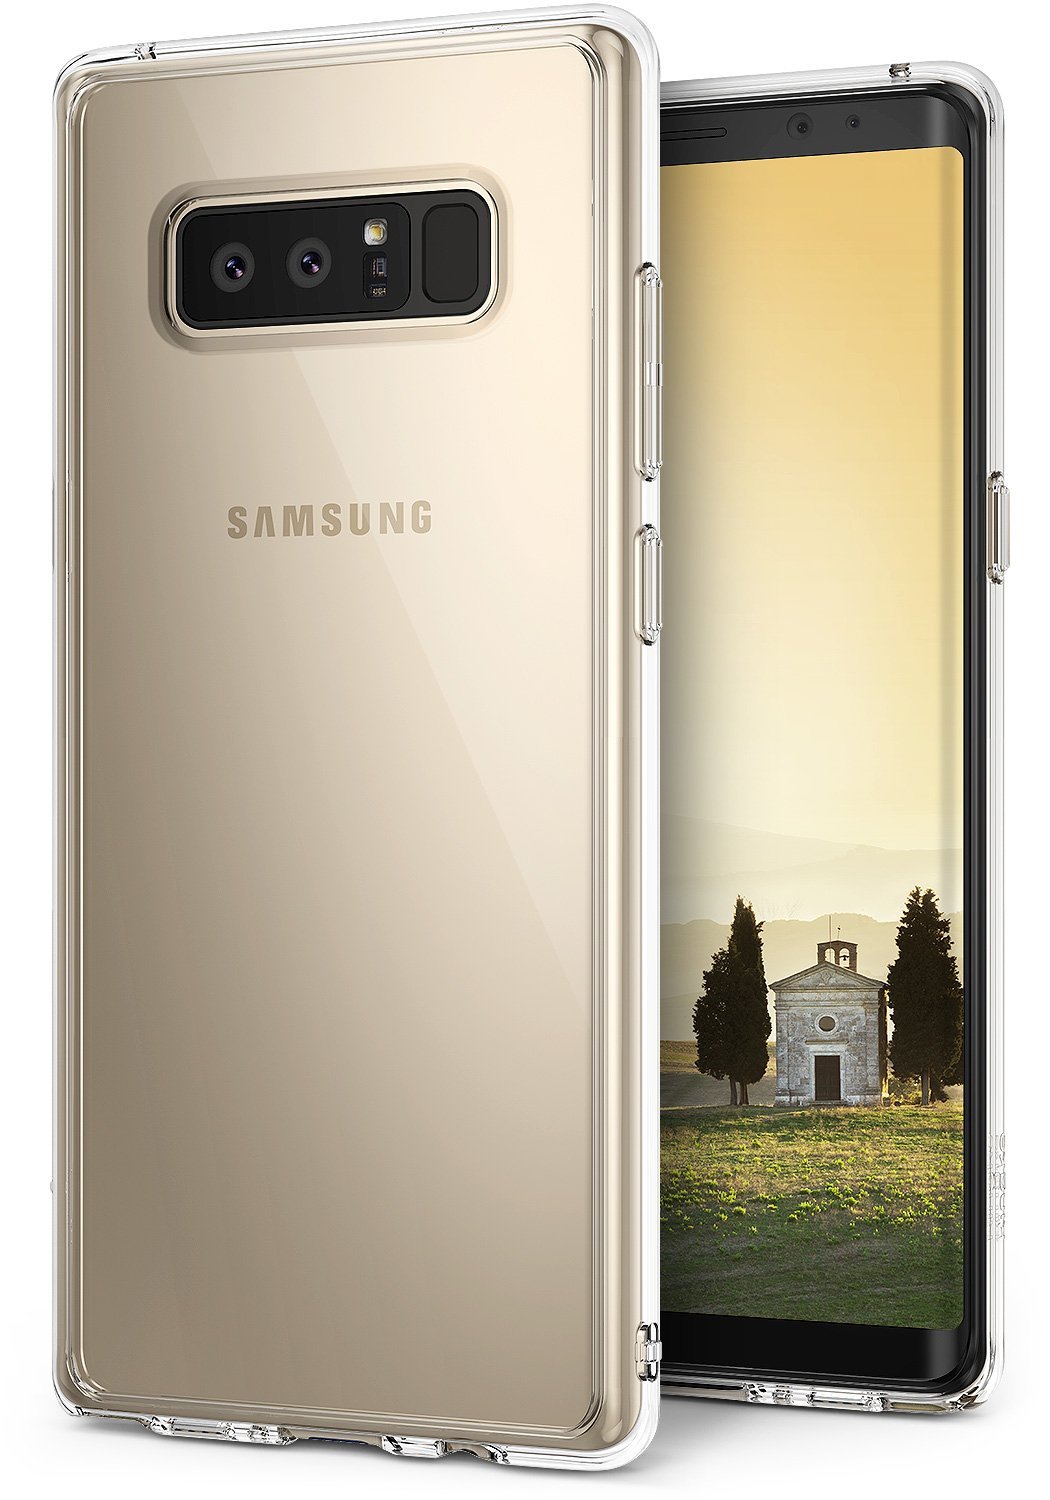 Samsung Galaxy Note 8 cases